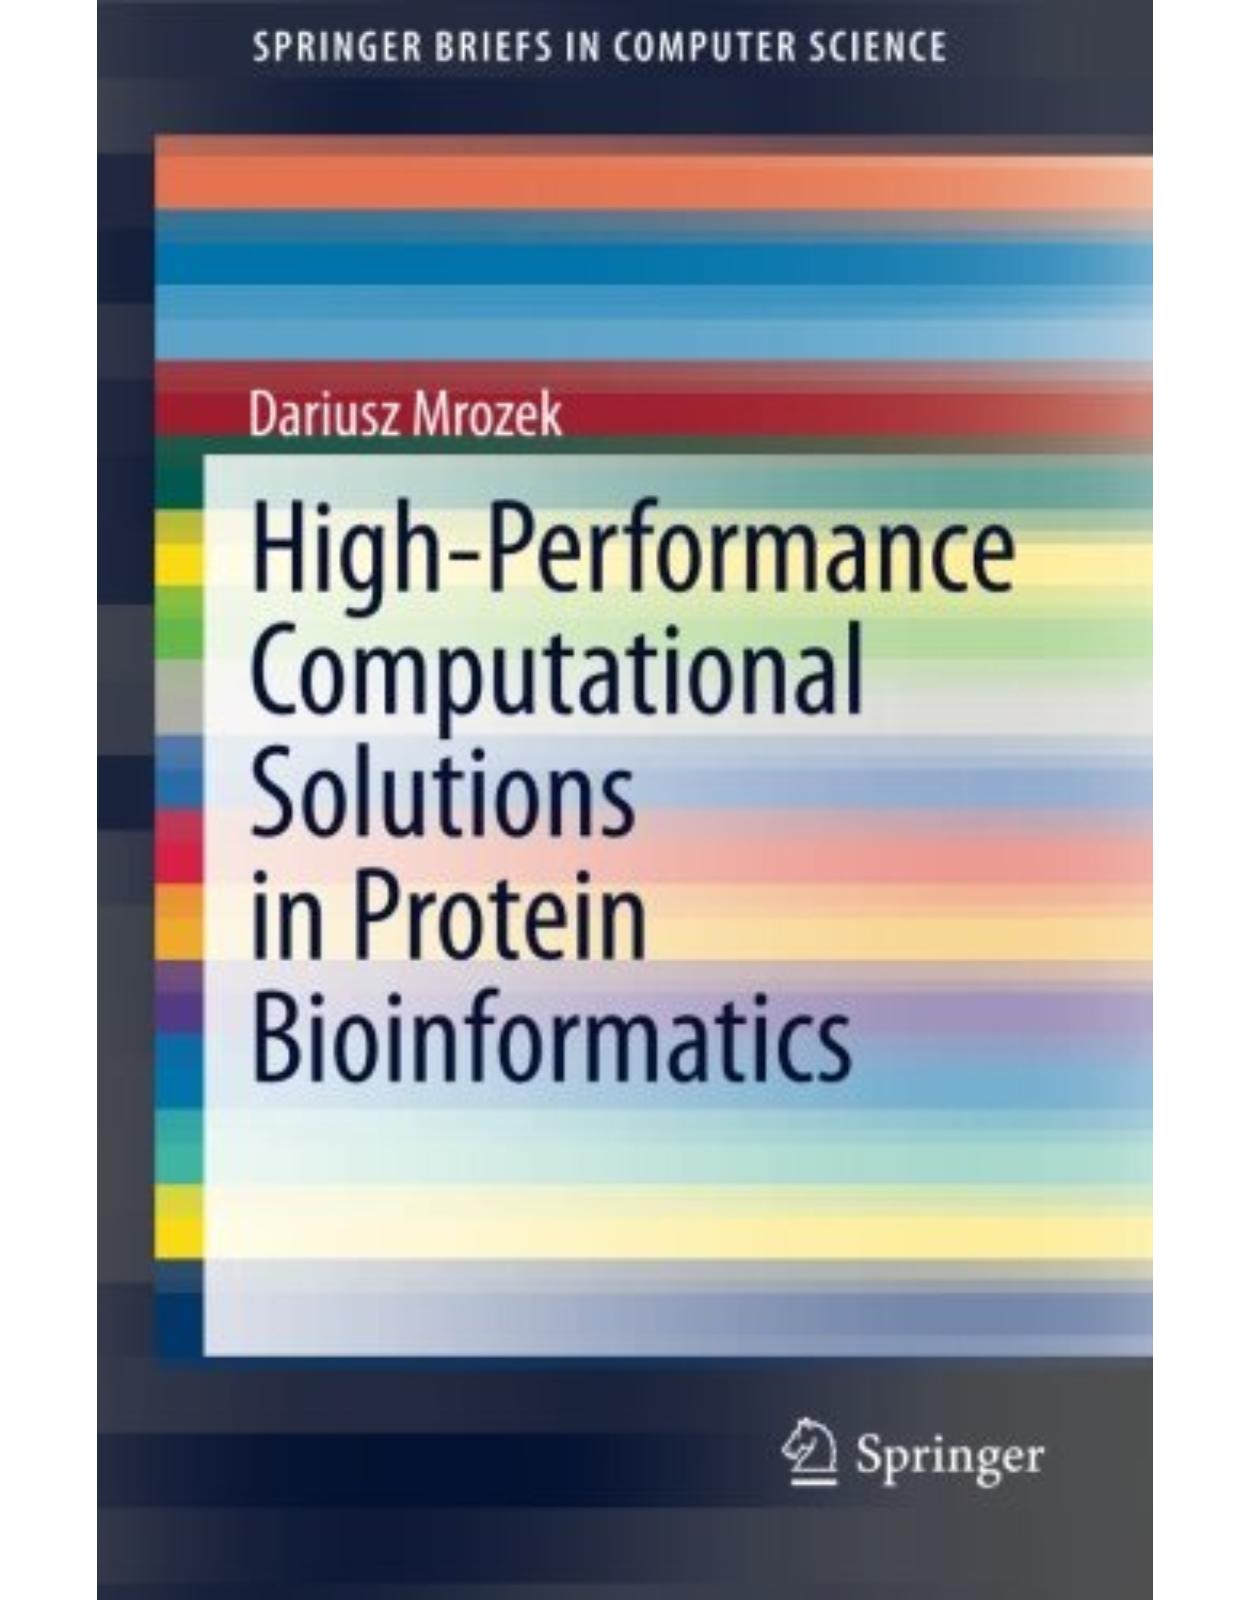 HighPerformance Computational Solutions in Protein Bioinformatics